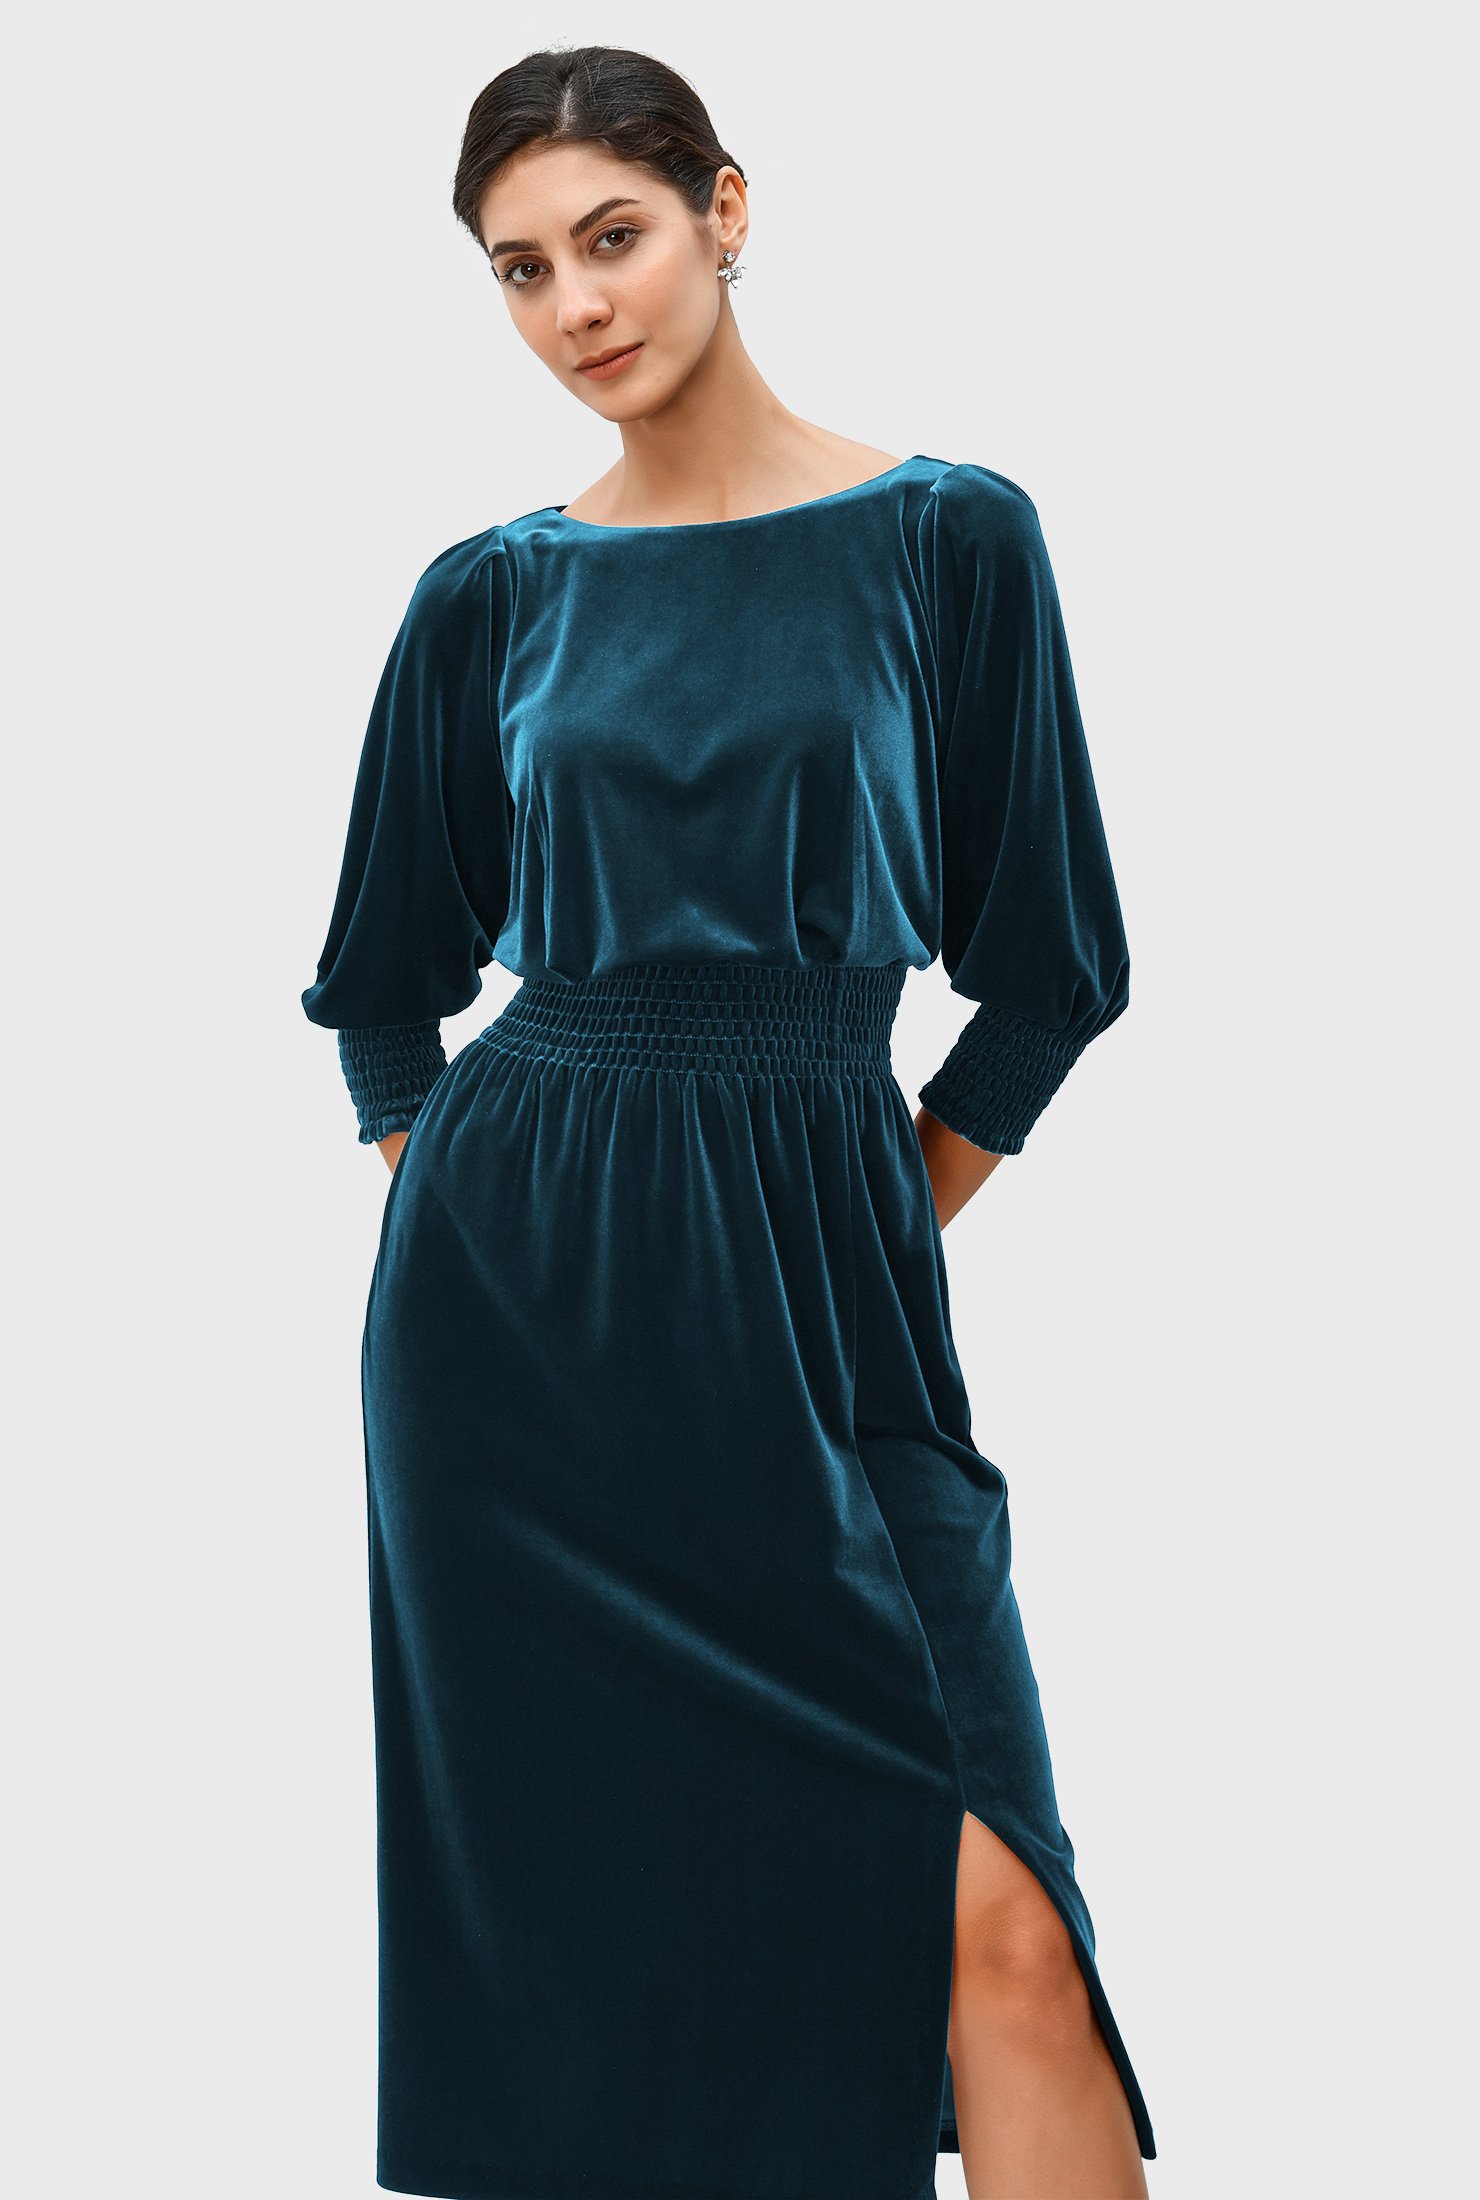 Shop Stretch velvet blouson dress | eShakti